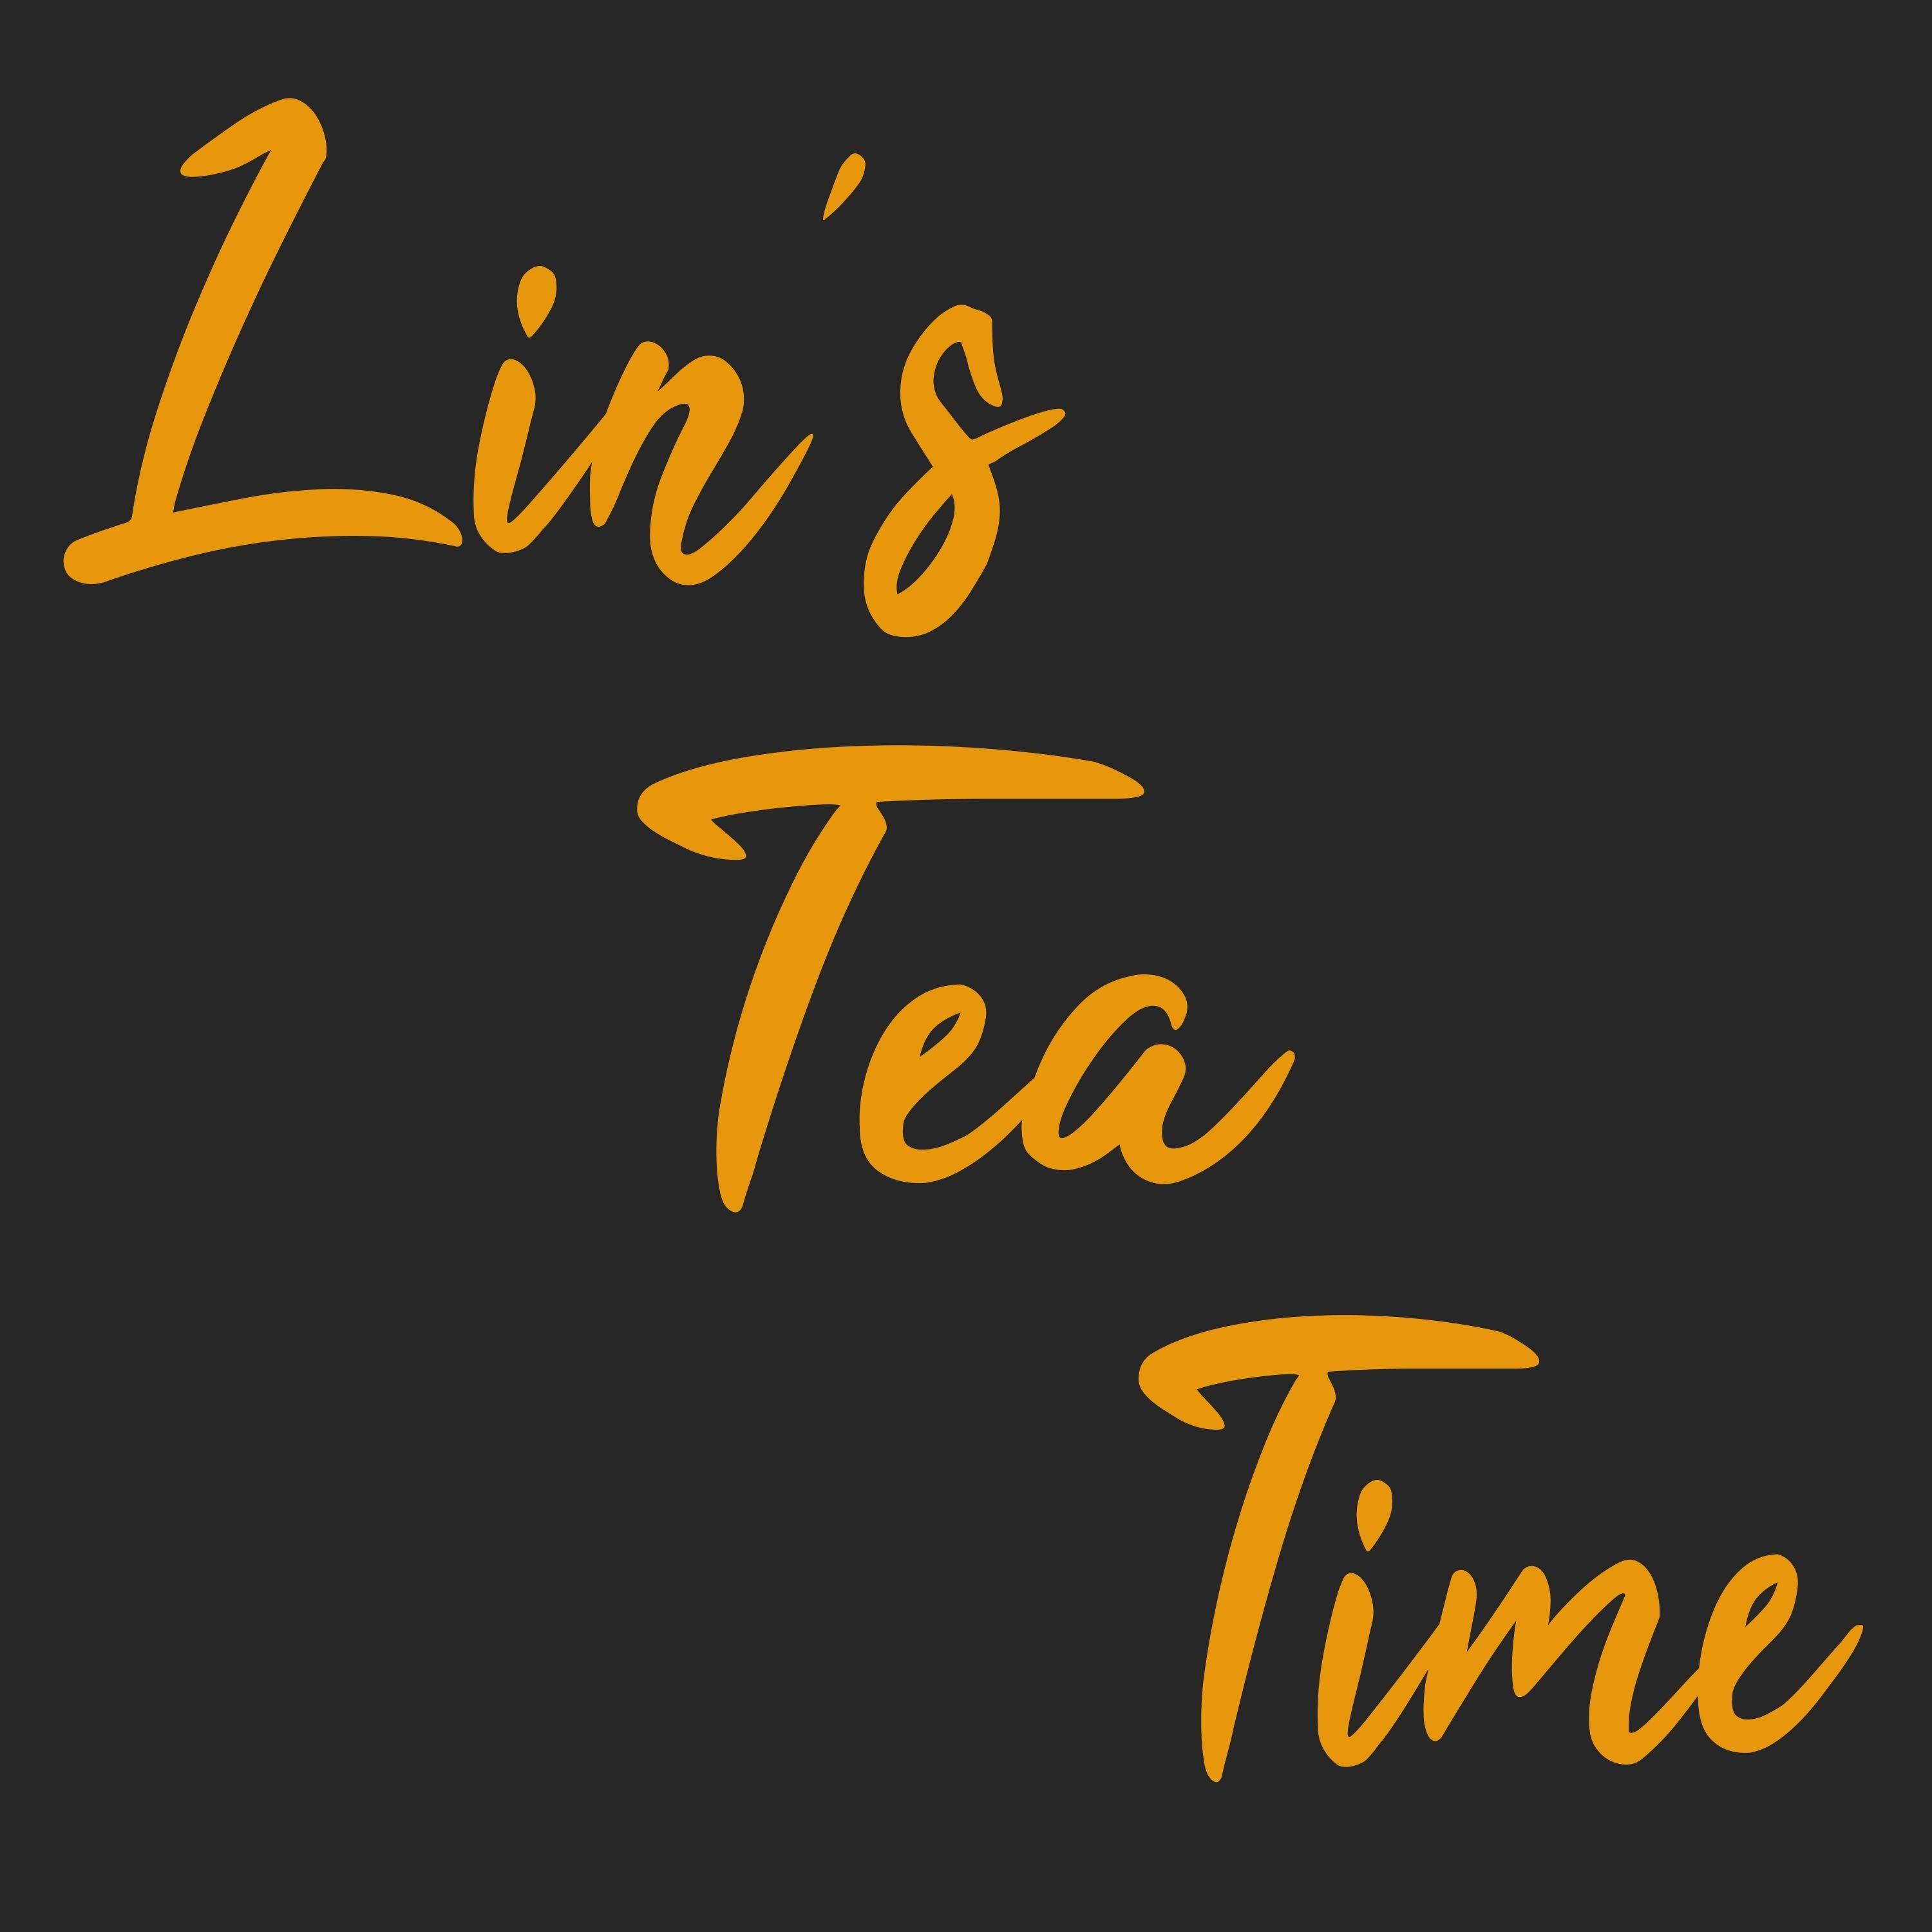 Lin's Tea Time